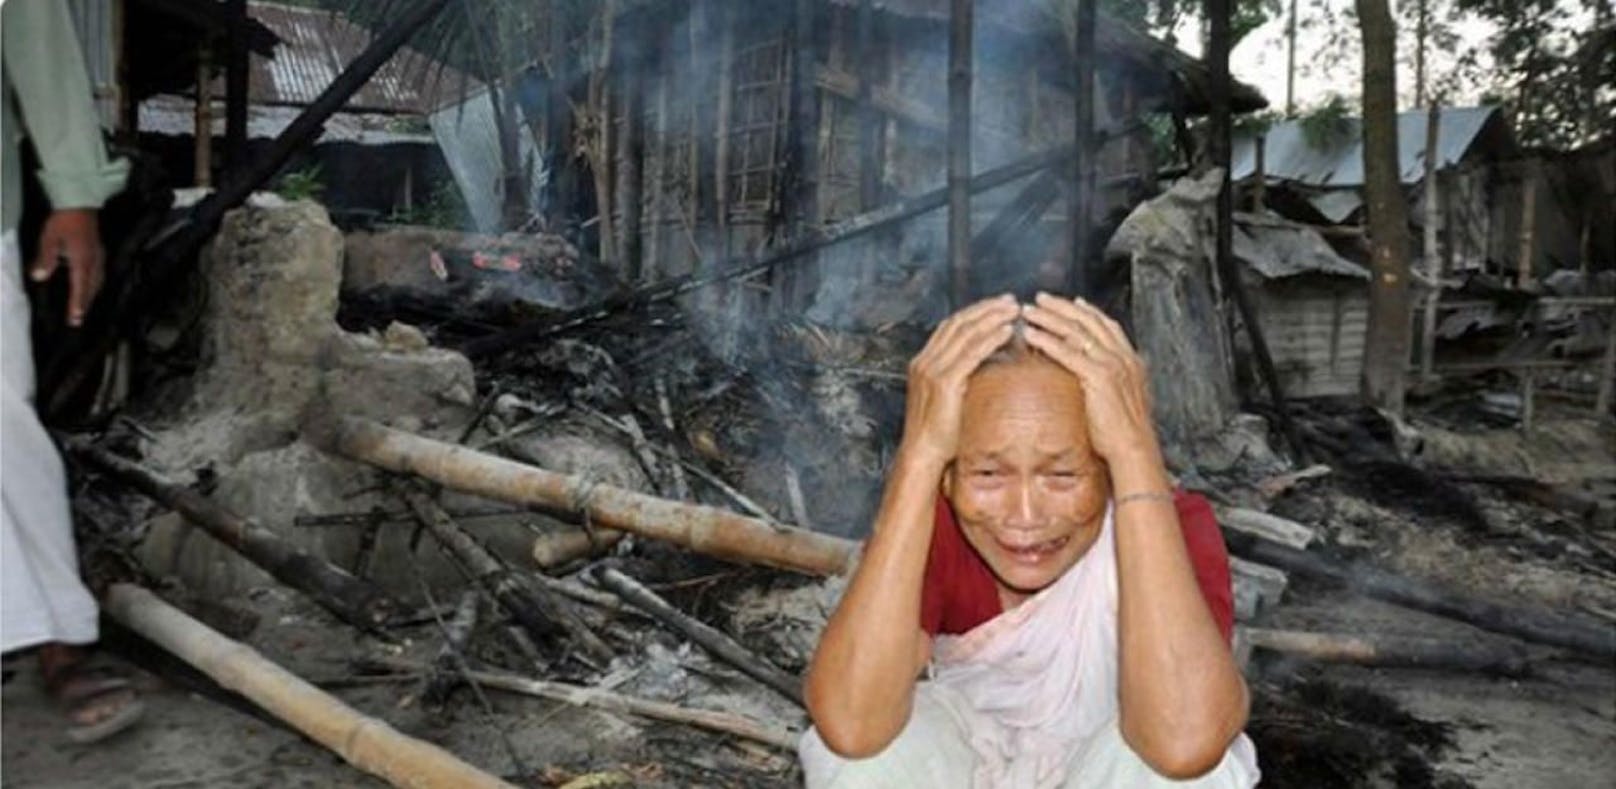 Mob brennt wegen Facebook-Post Dorf nieder